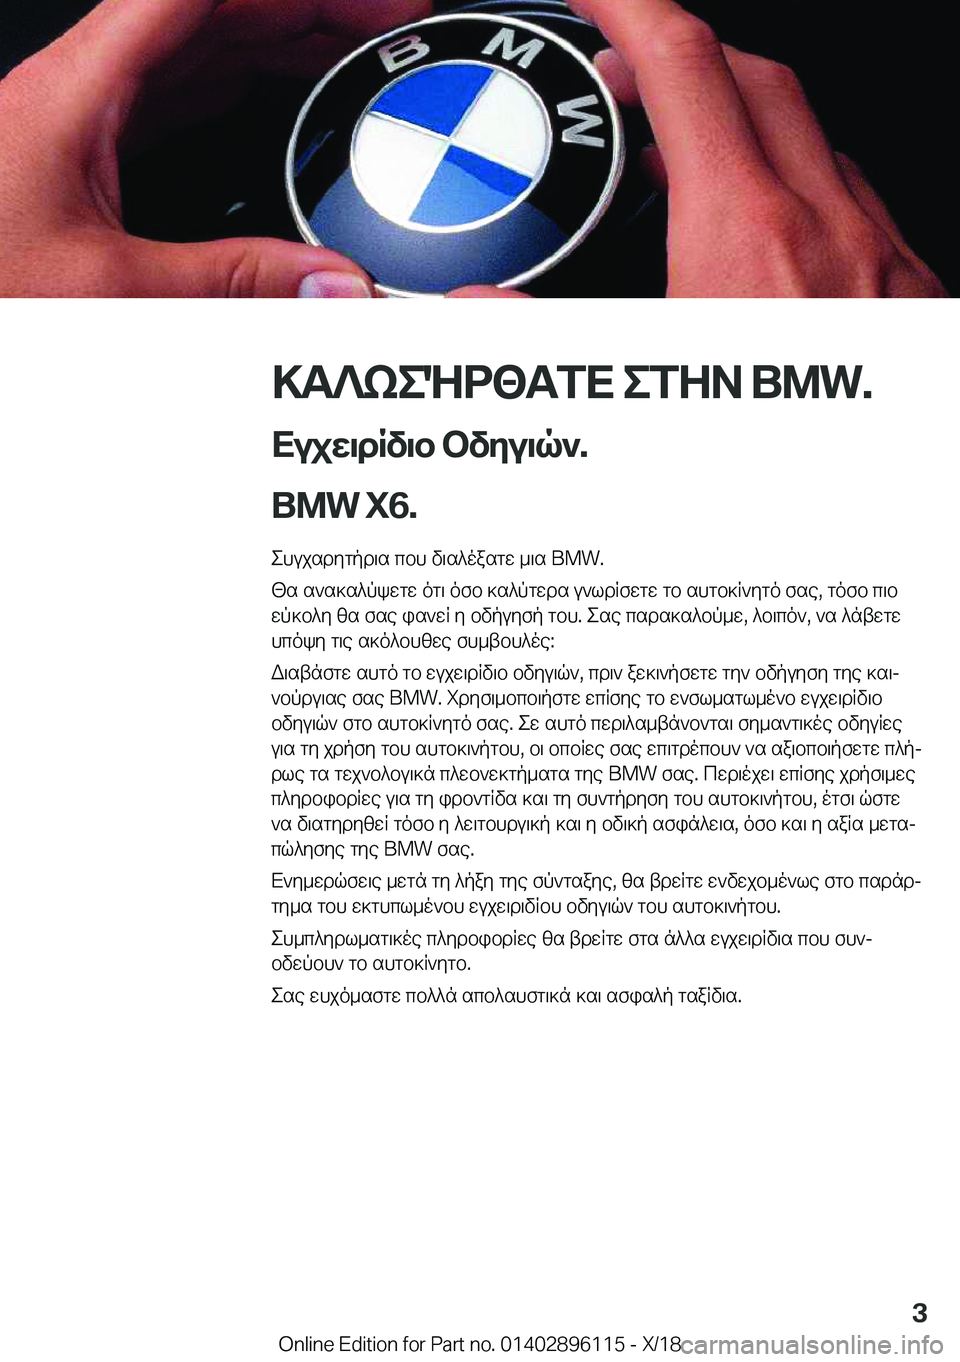 BMW X6 2019  ΟΔΗΓΌΣ ΧΡΉΣΗΣ (in Greek) >T?keNd<TfX�efZA��B�M�W�.
Xujw\dRv\b�bvyu\q`�.
�B�M�W��X�6�. ehujsdygpd\s�cbh�v\s^oasgw�_\s��B�M�W�.
[s�s`s]s^pkwgw�o